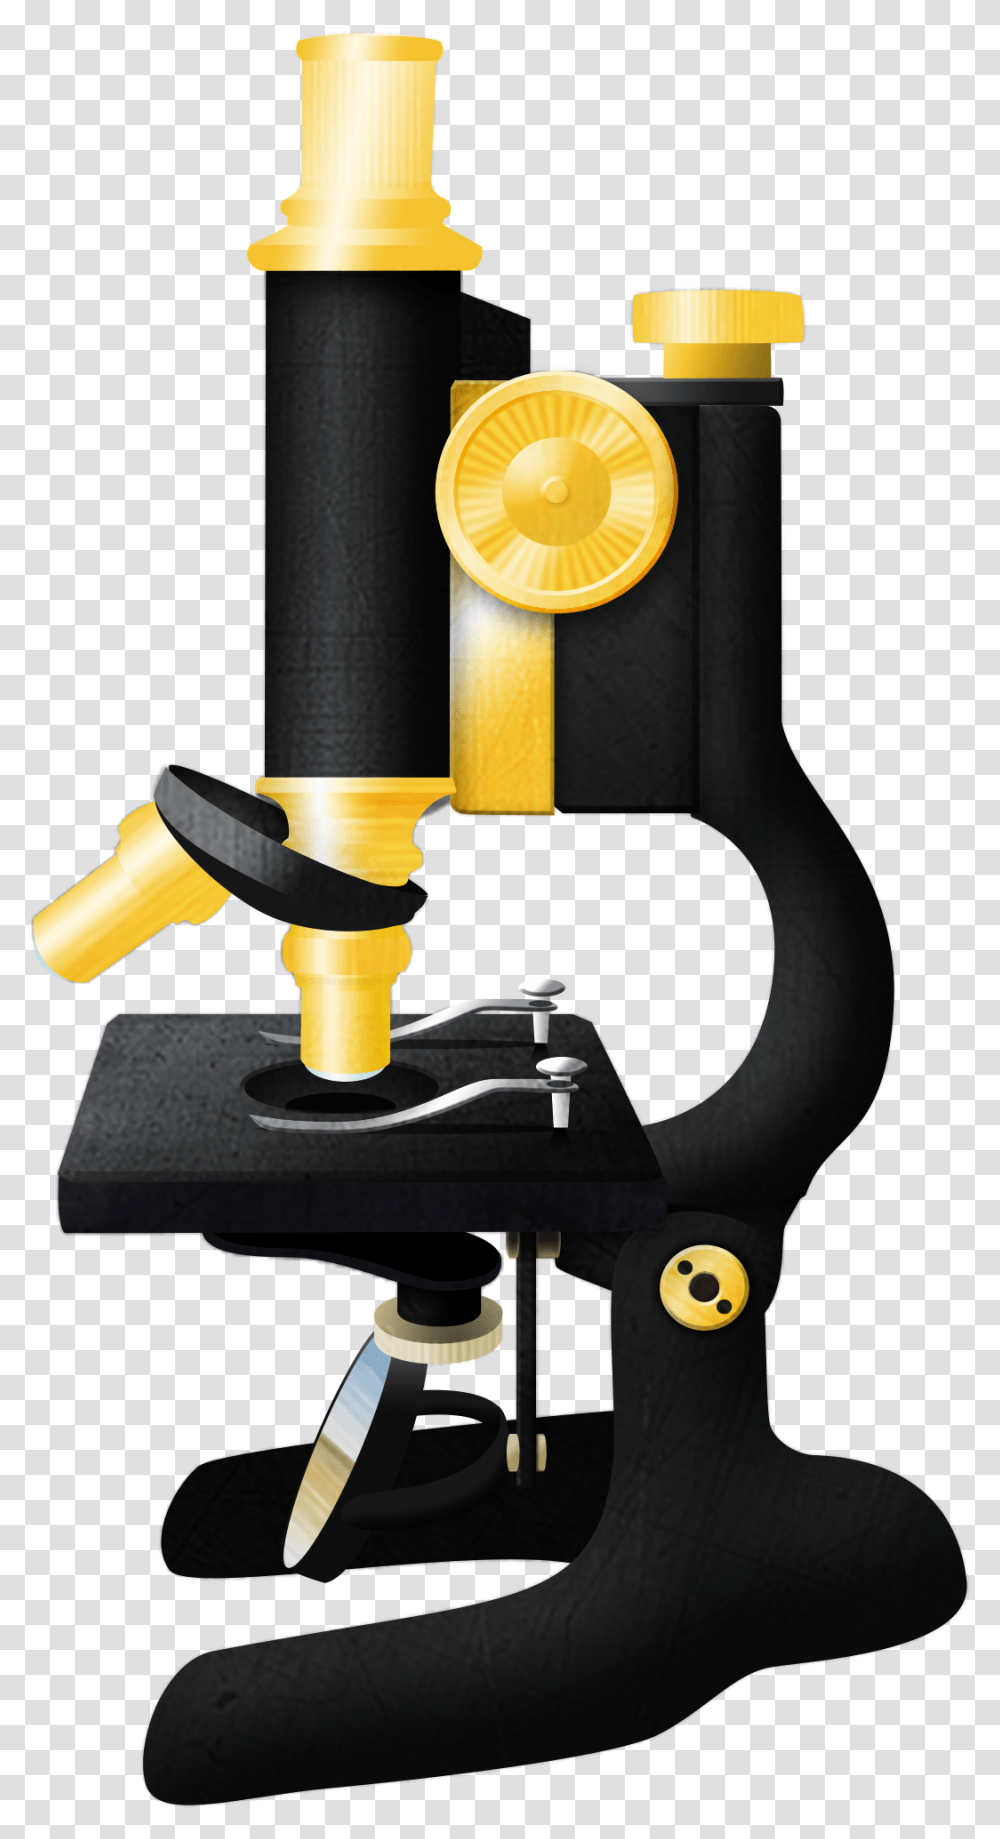 Imagej Fiji, Microscope, Lamp Transparent Png